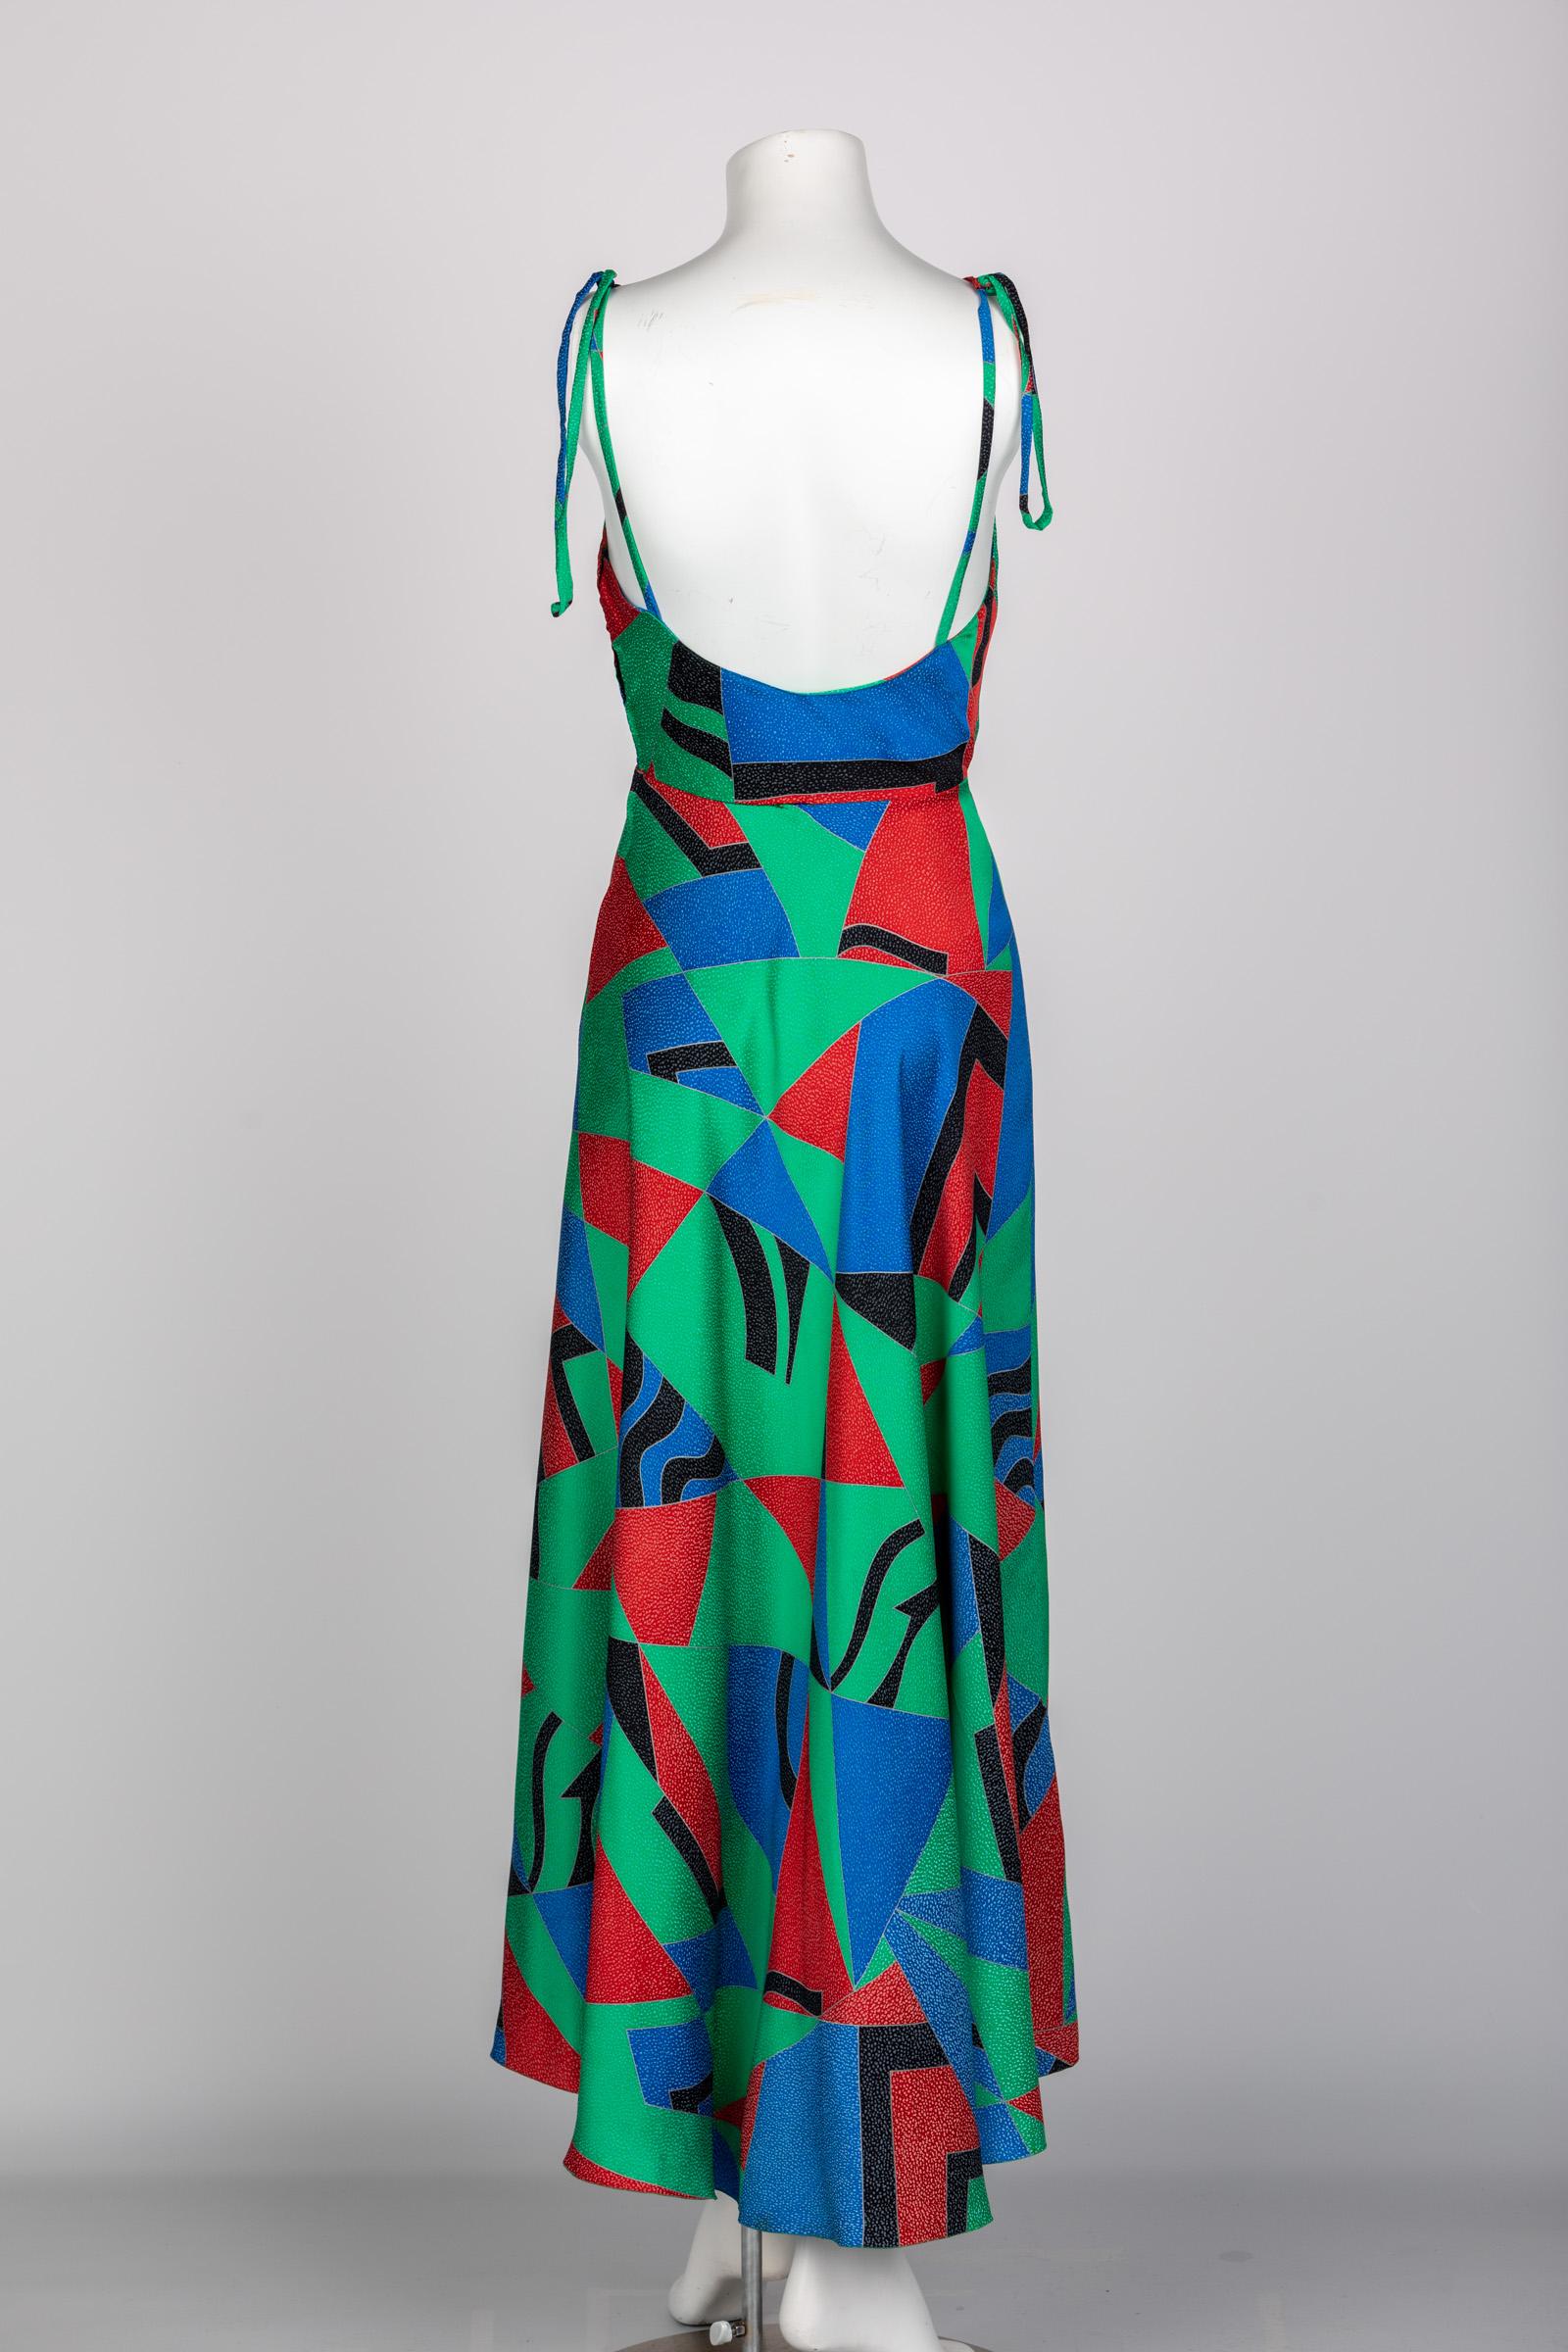 Chloe Karl Lagerfeld Cubist Green Silk Print Sleeveless Dress, 1970s For Sale 1